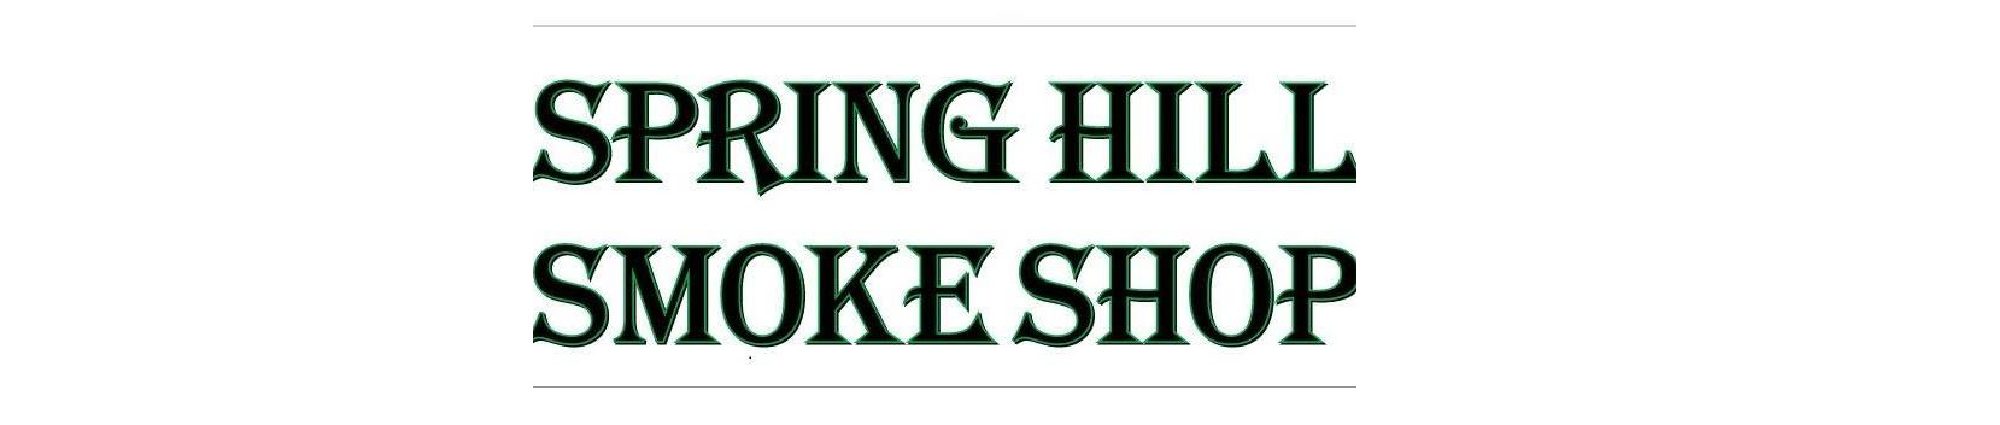 image of spring hill cbd smoke shop in florida